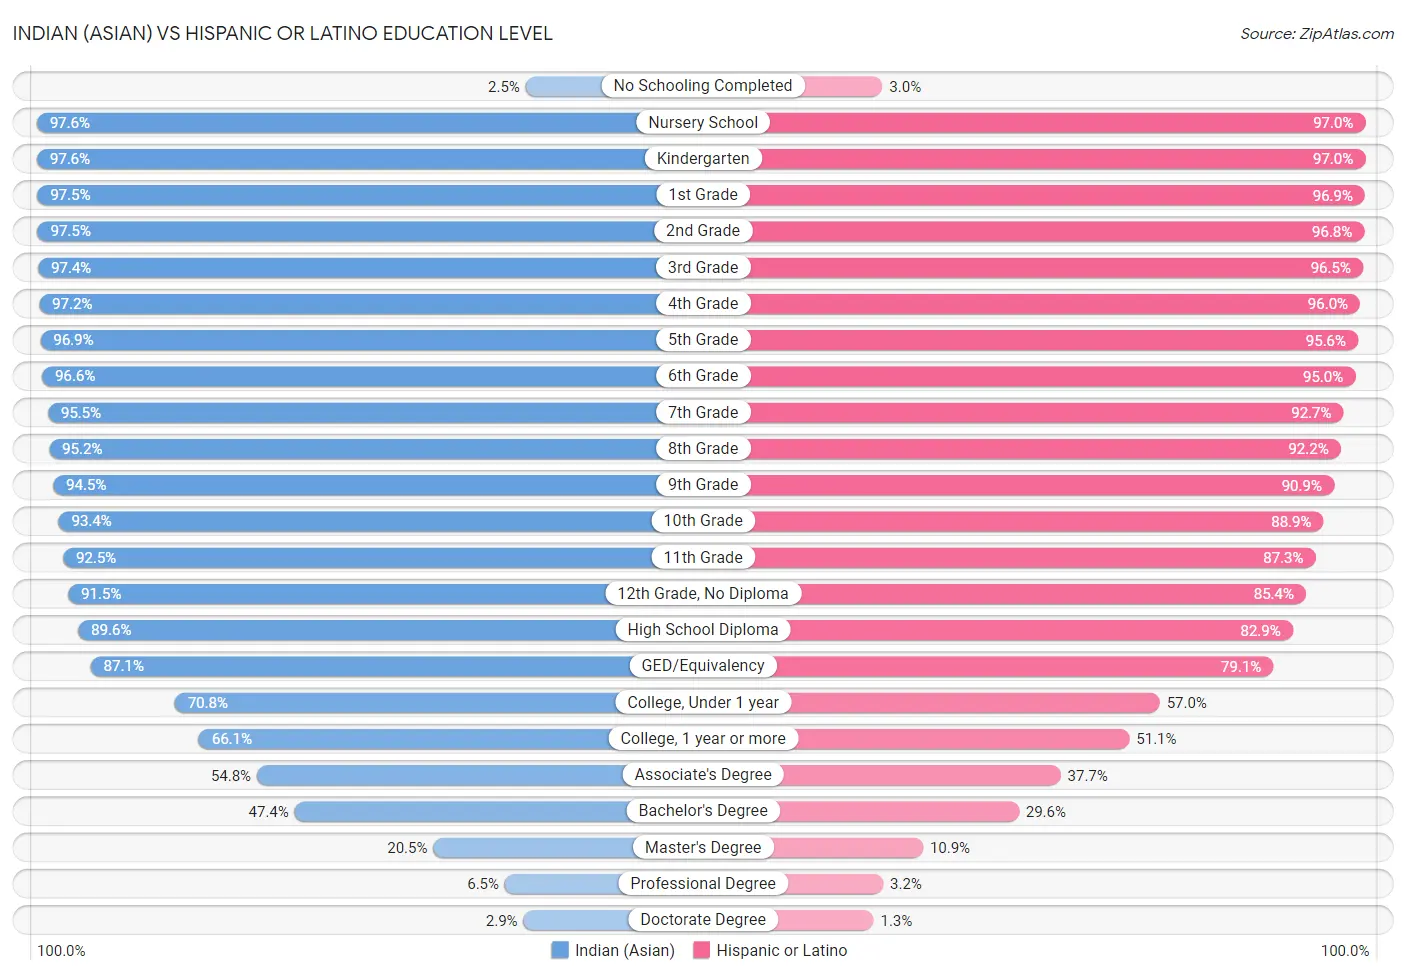 Indian (Asian) vs Hispanic or Latino Education Level